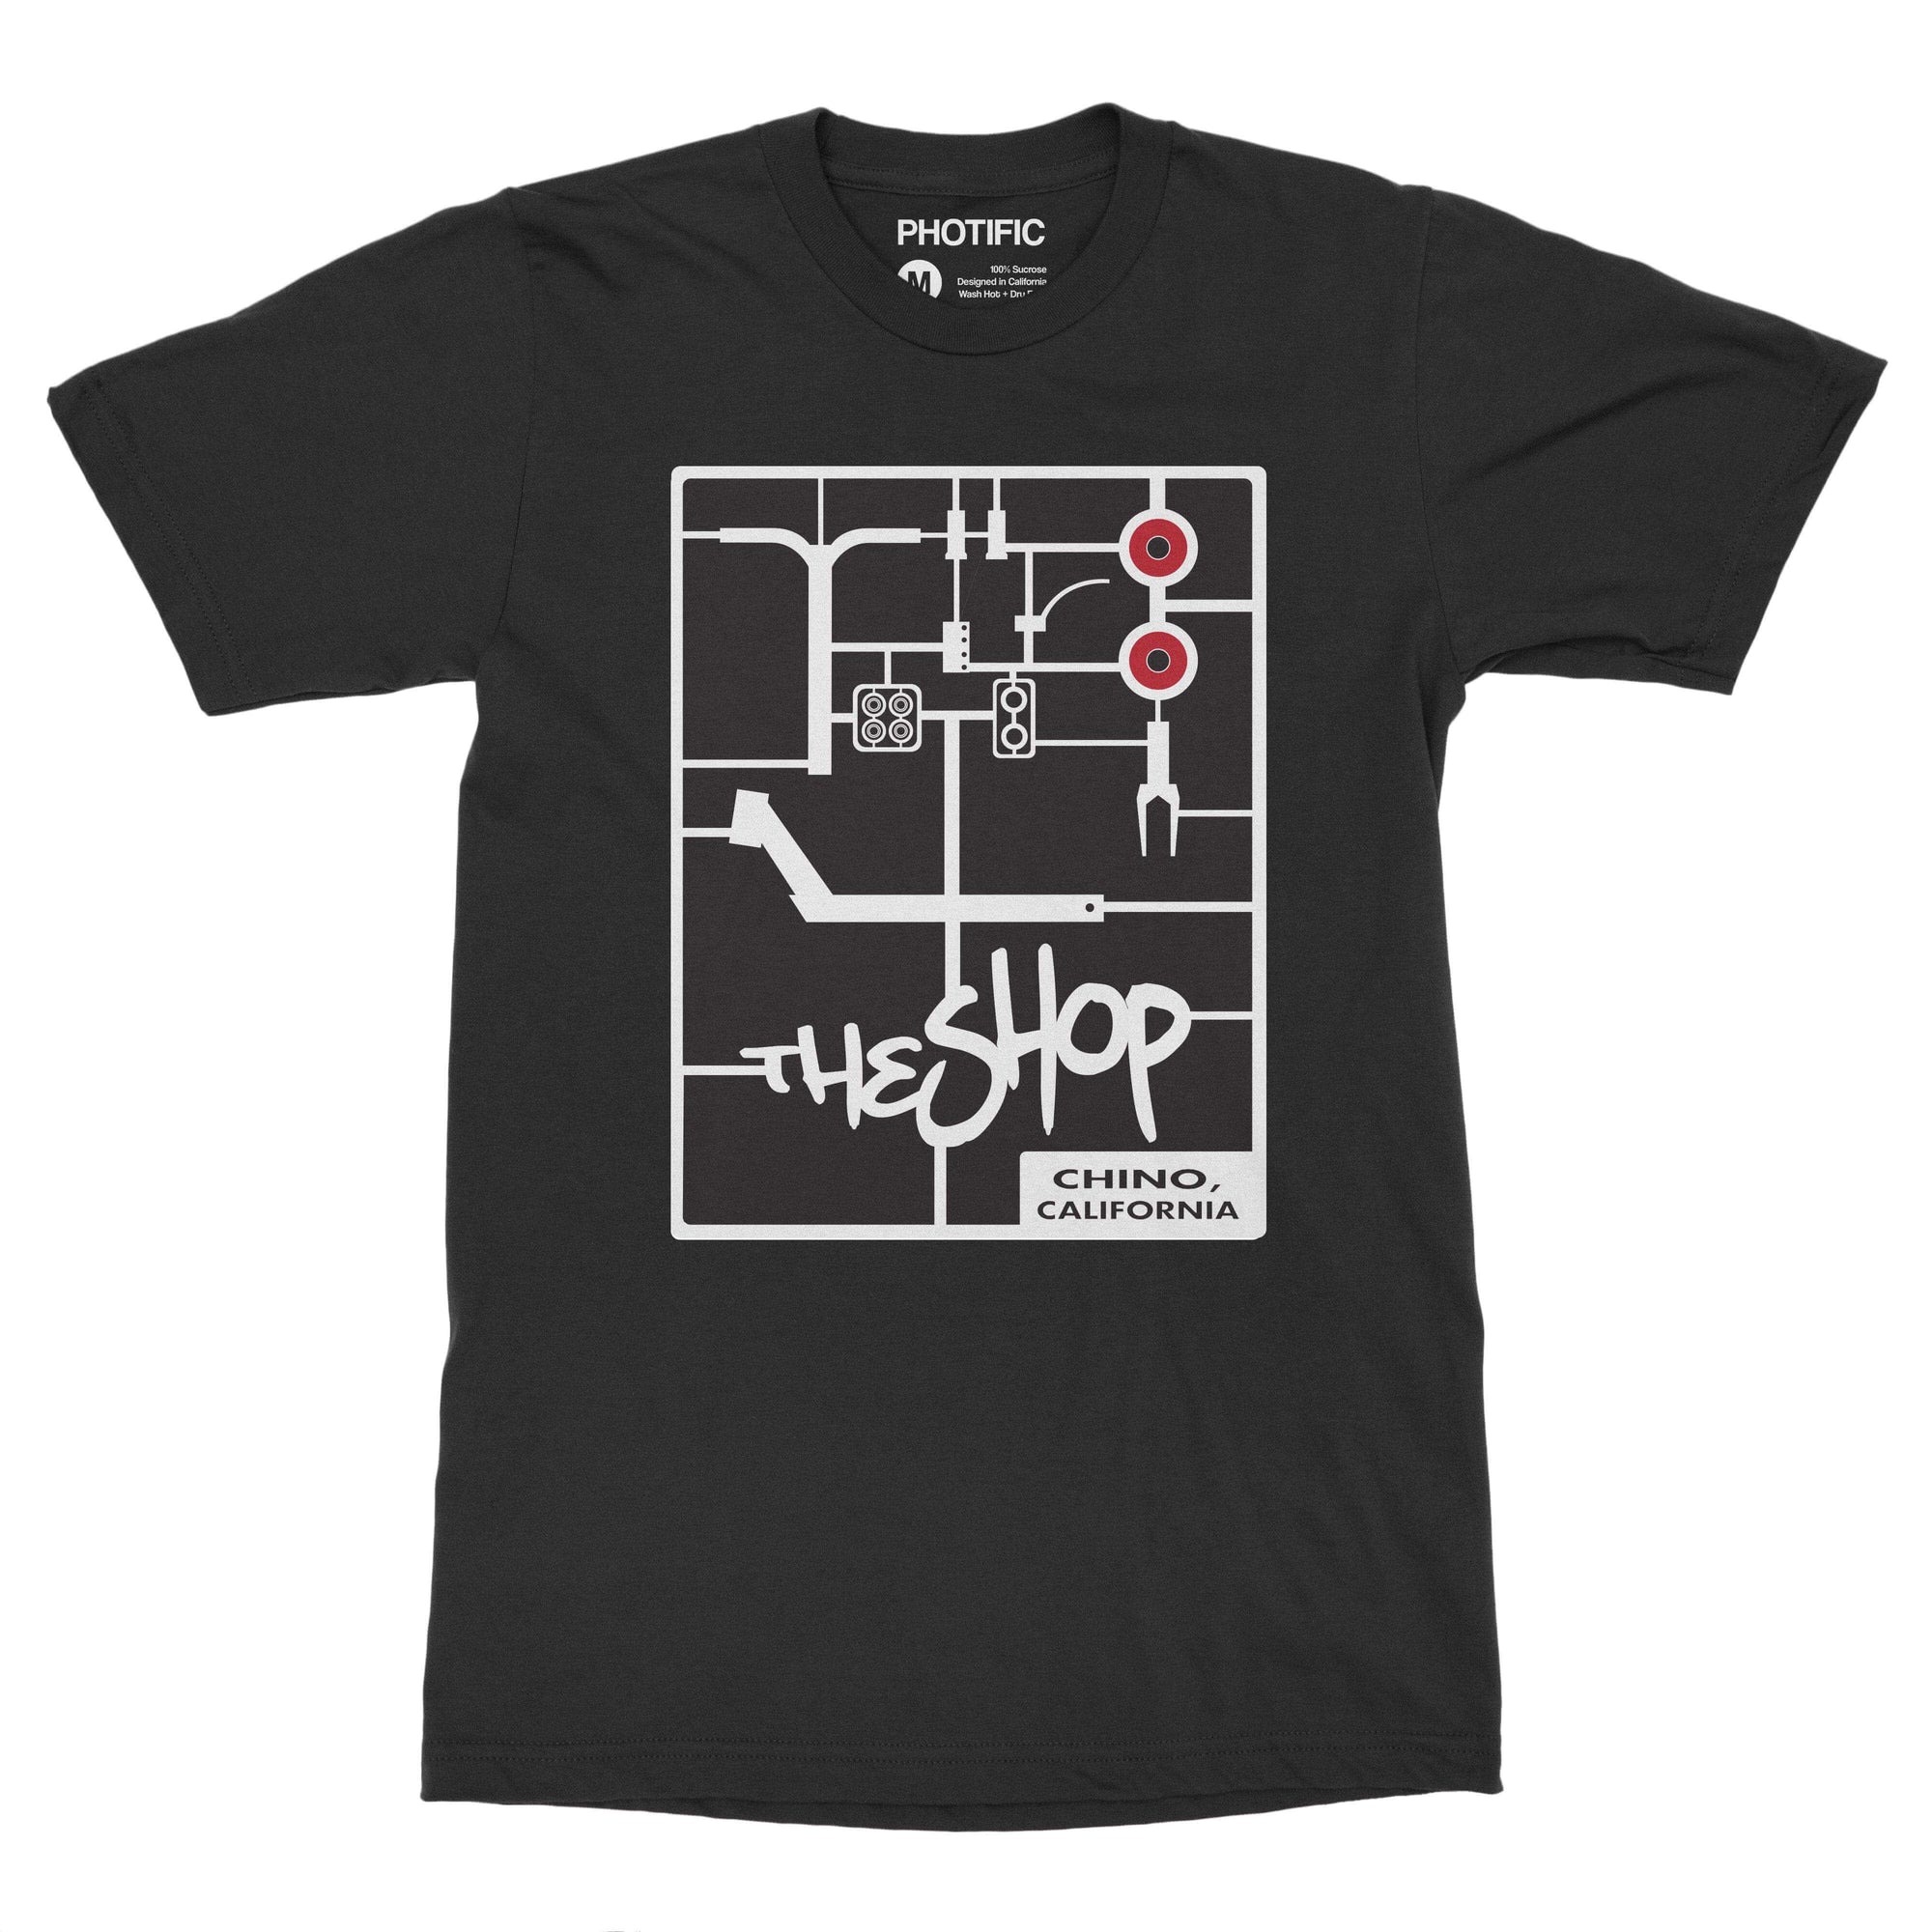 TSP Crew "Model" Shirt |Shirts |$19.99 |TSP The Shop | TSP Crew "Model" Shirt | The Shop Pro Scooter Lab